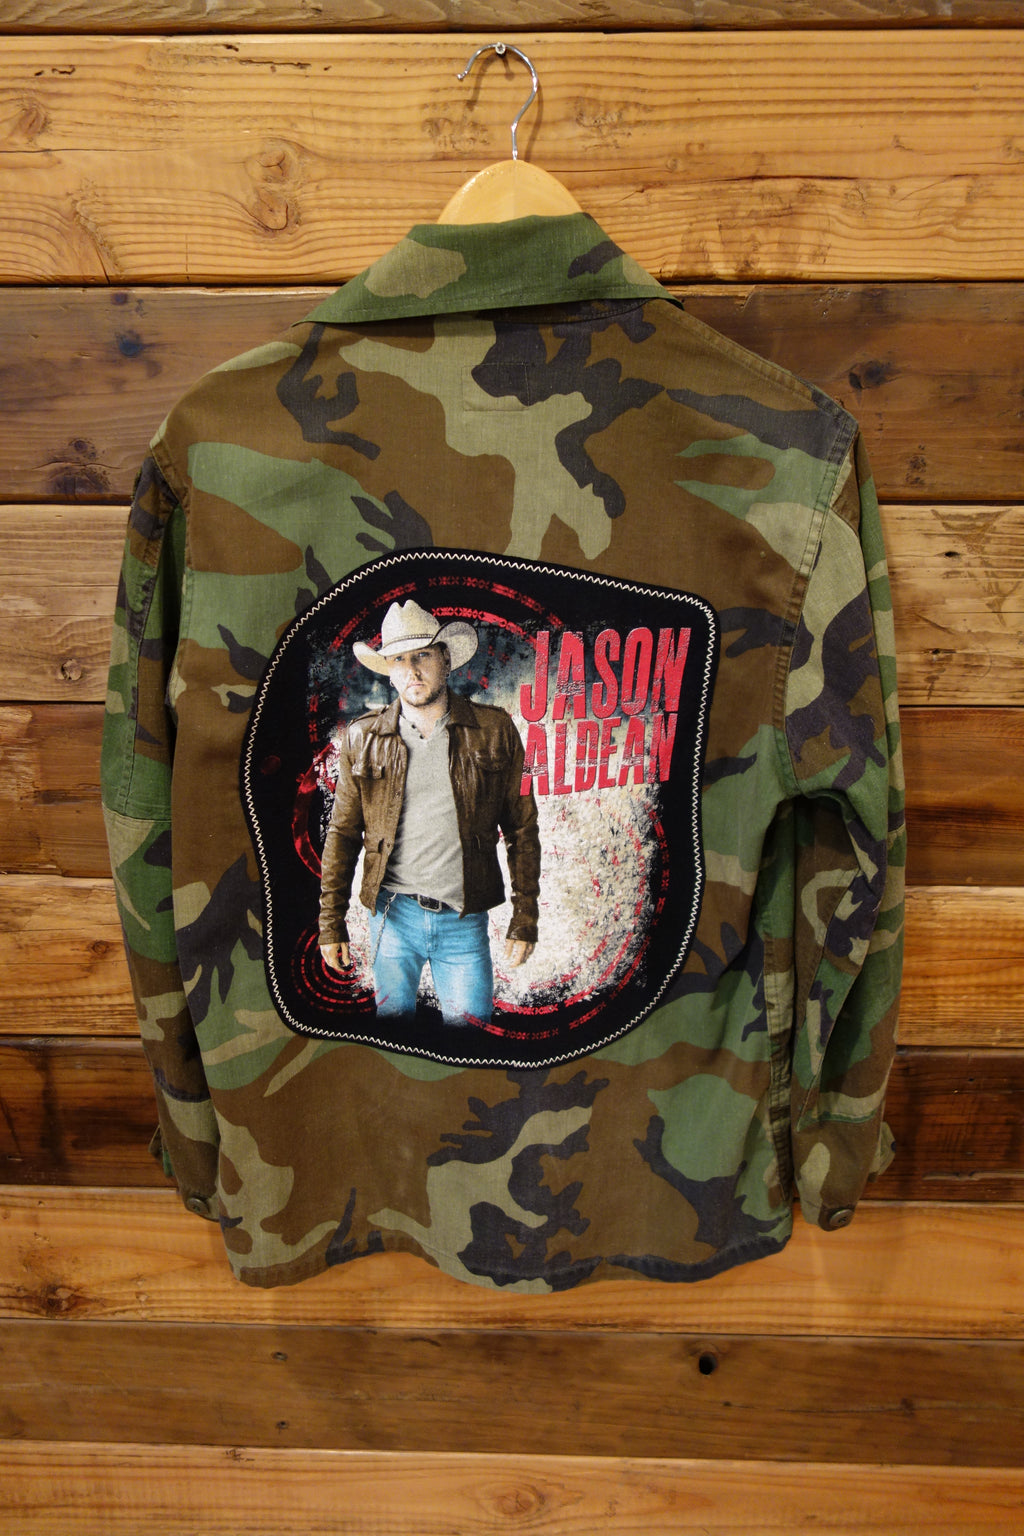 Jason Aldean concert tee one of a kind custom military camo jacket